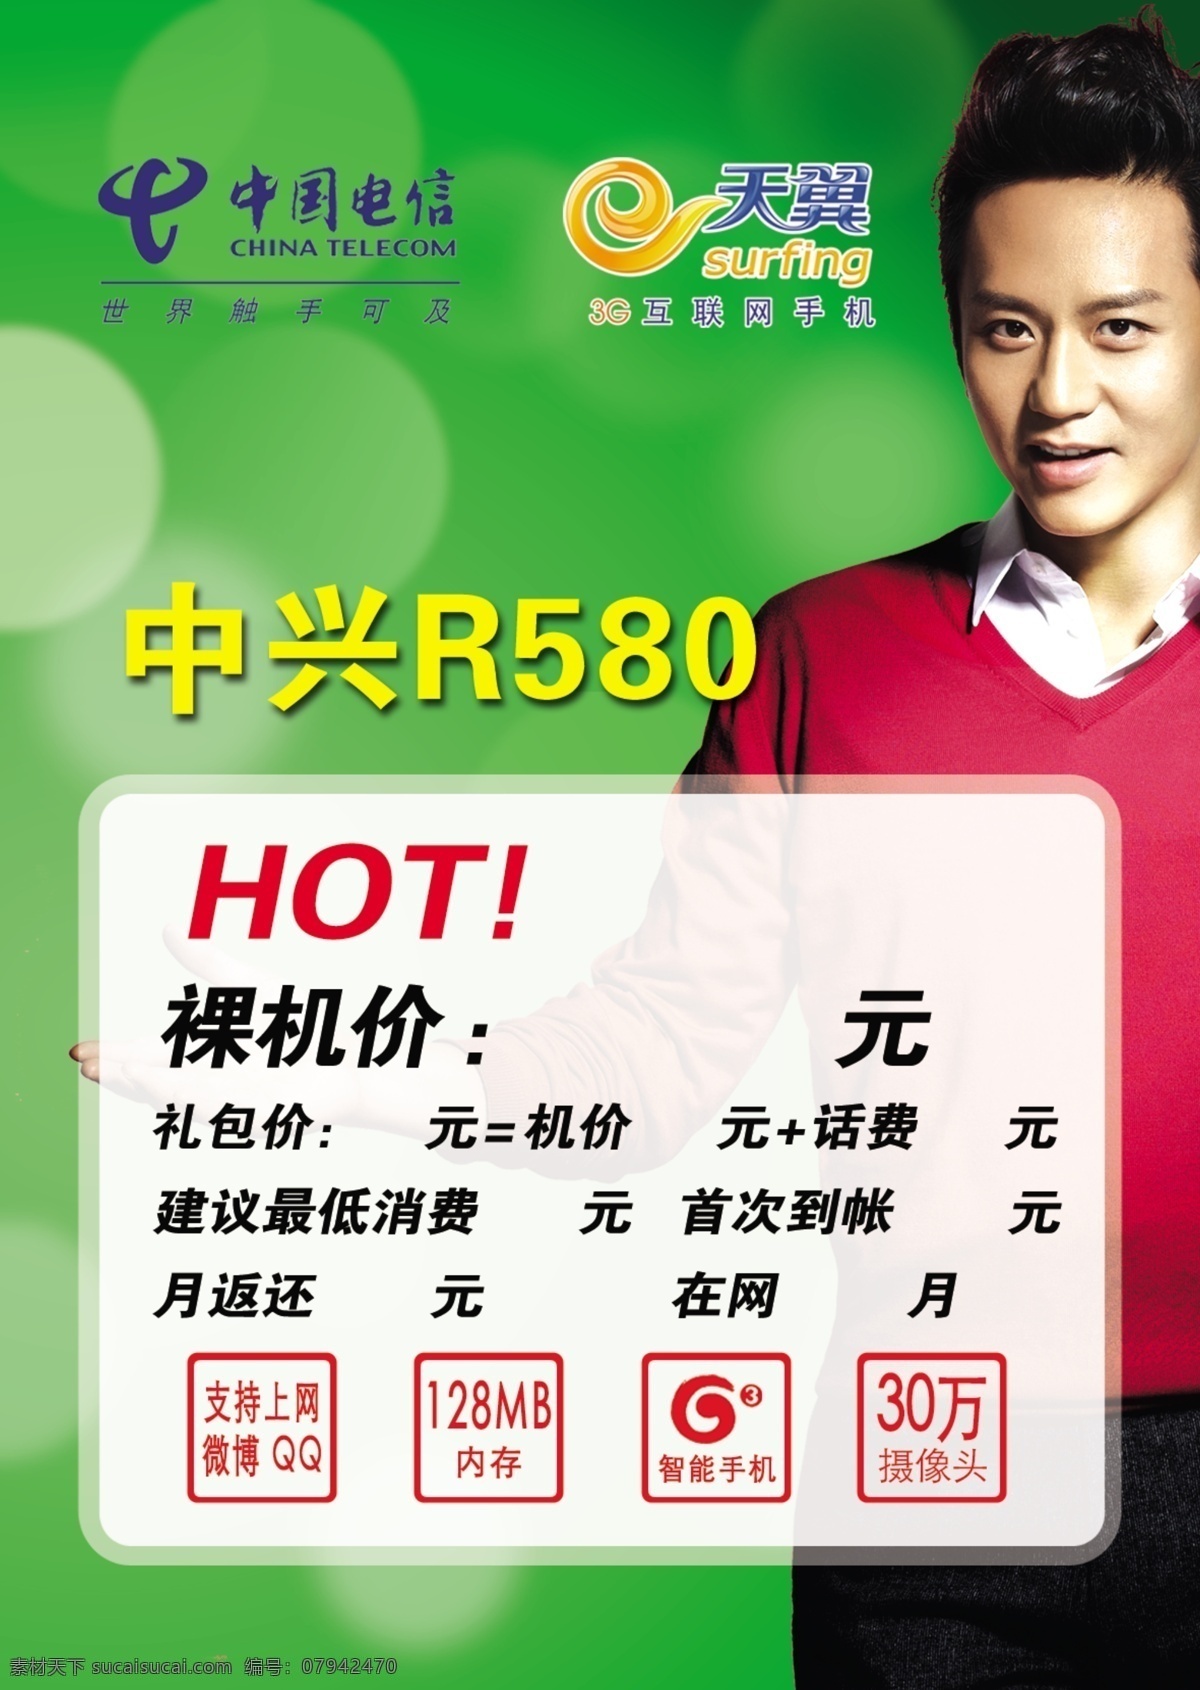 3g hot 邓超 功能 广告设计模板 绿背景 时尚设计 中国电信 天翼 价格卡片 源文件 海报背景图